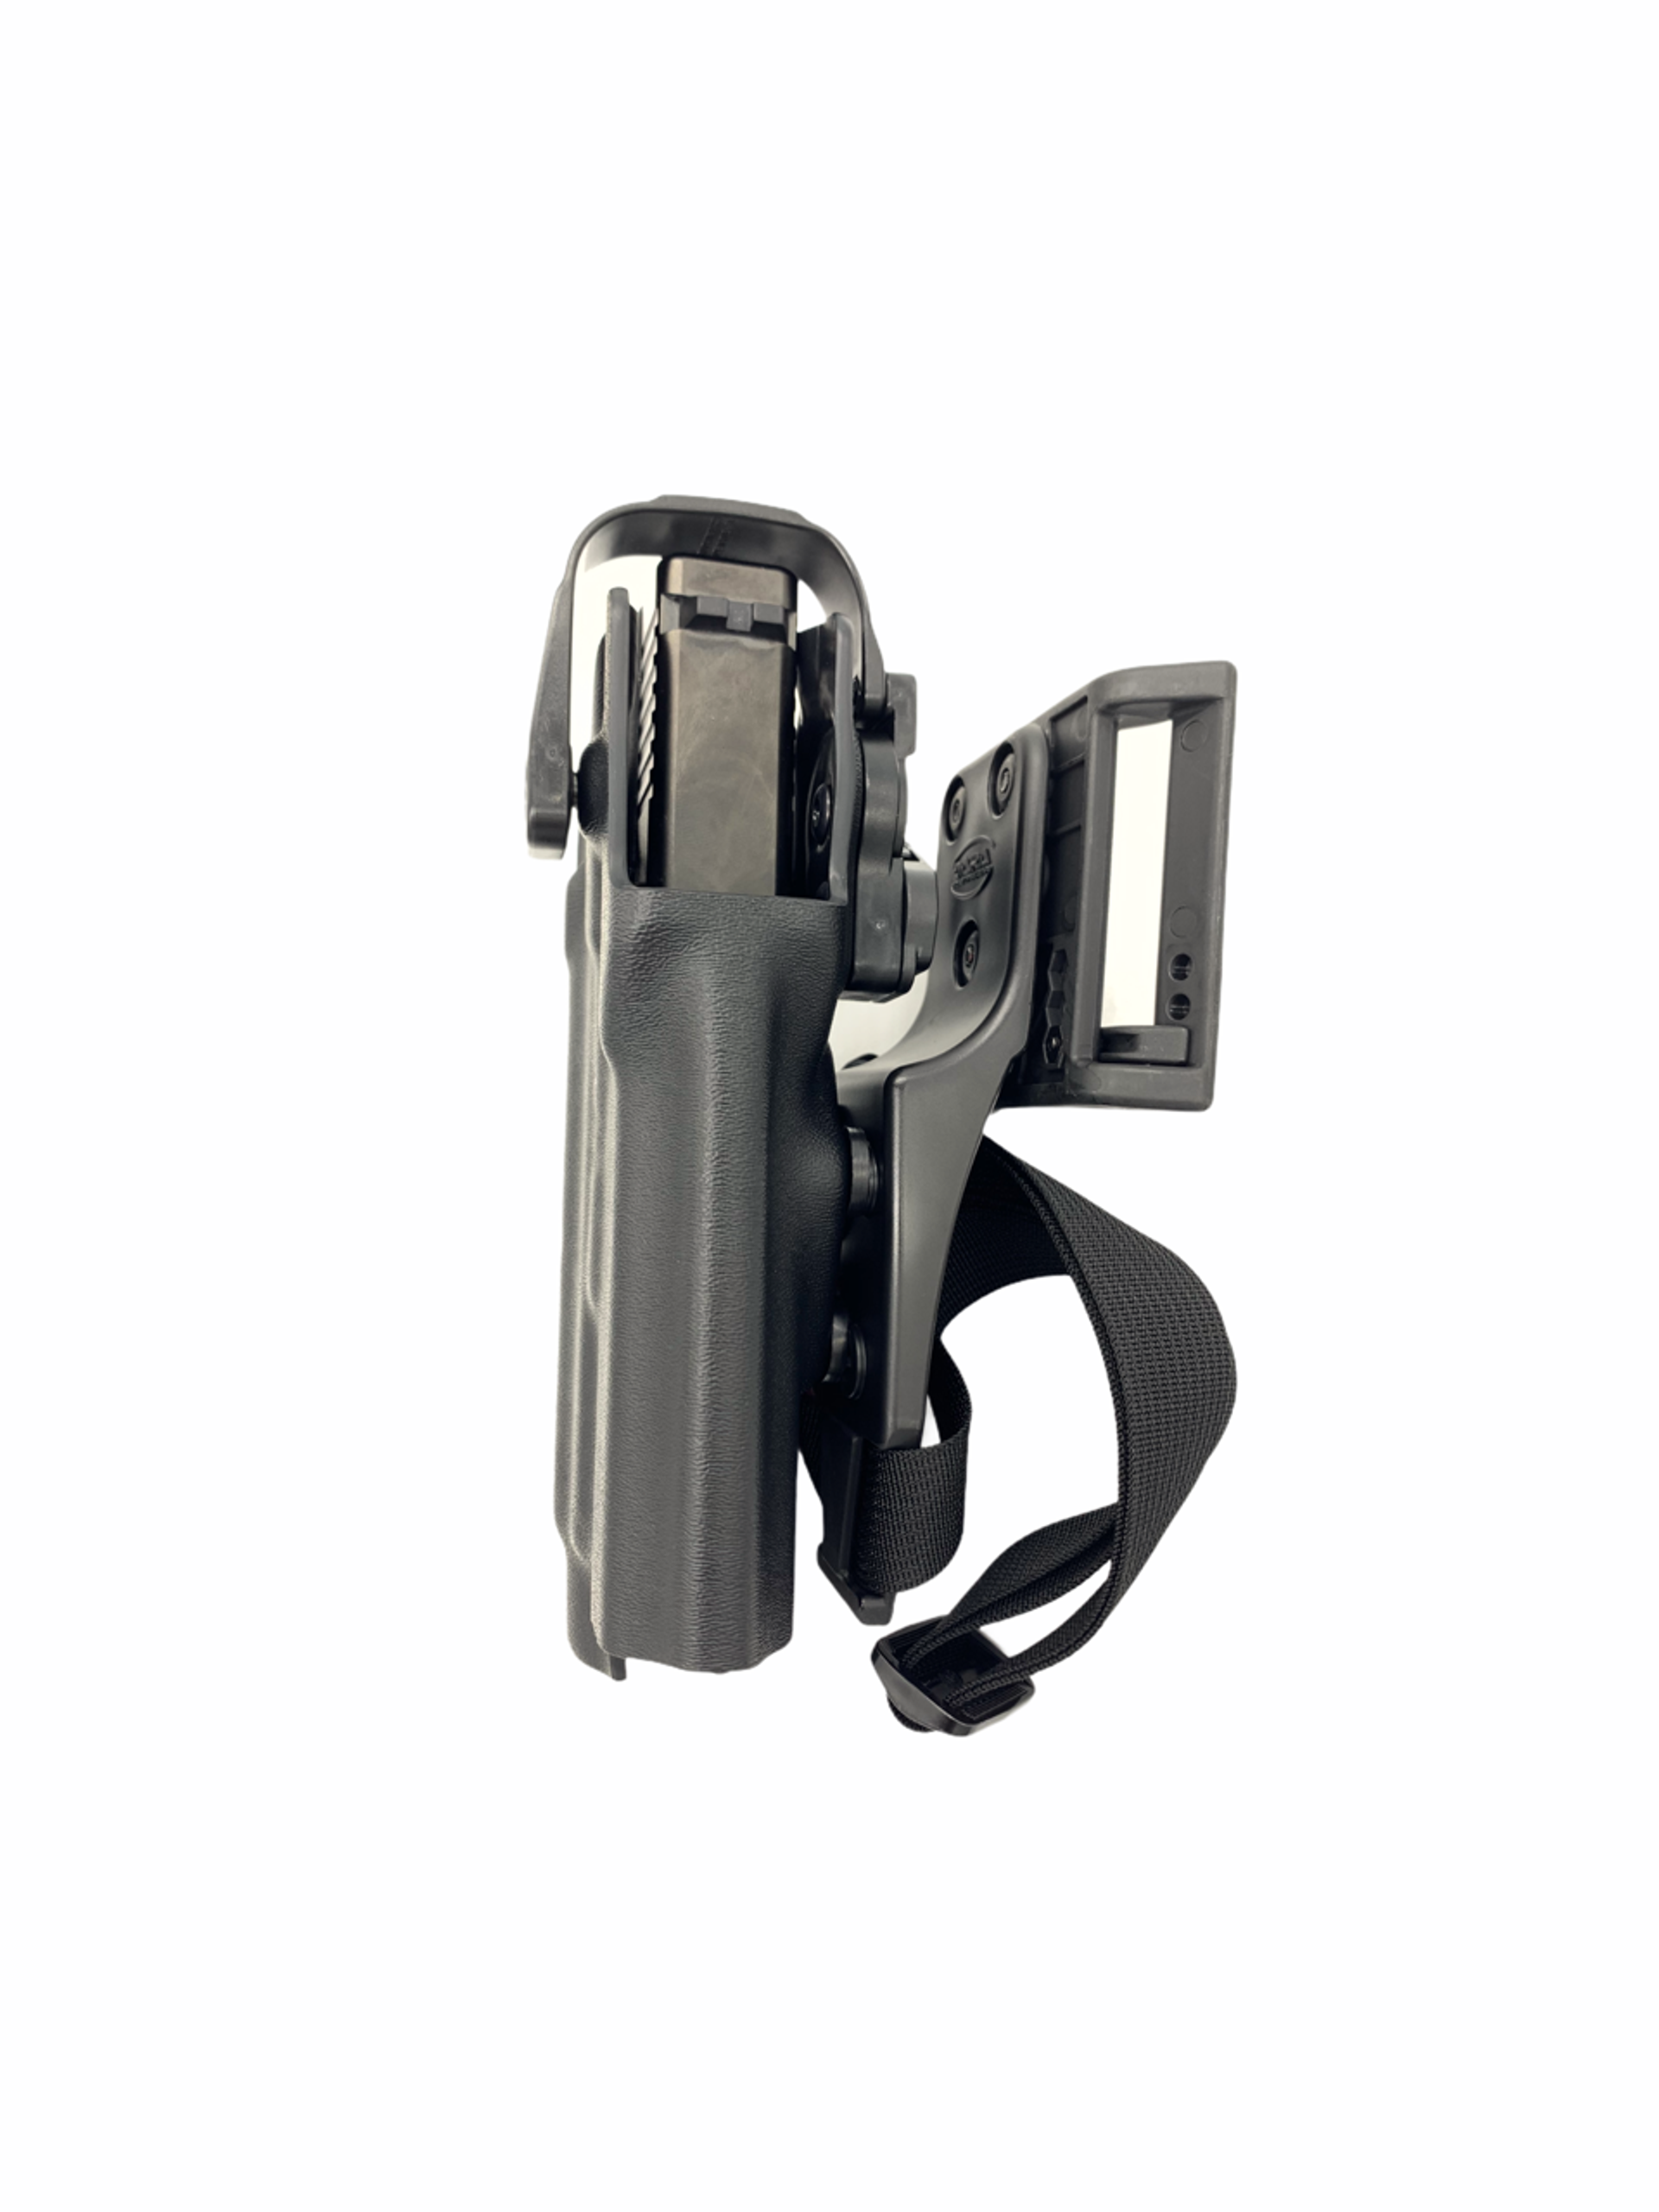 Glock 17 gen 3/4 with Streamlight TLR-1 Duty Holster